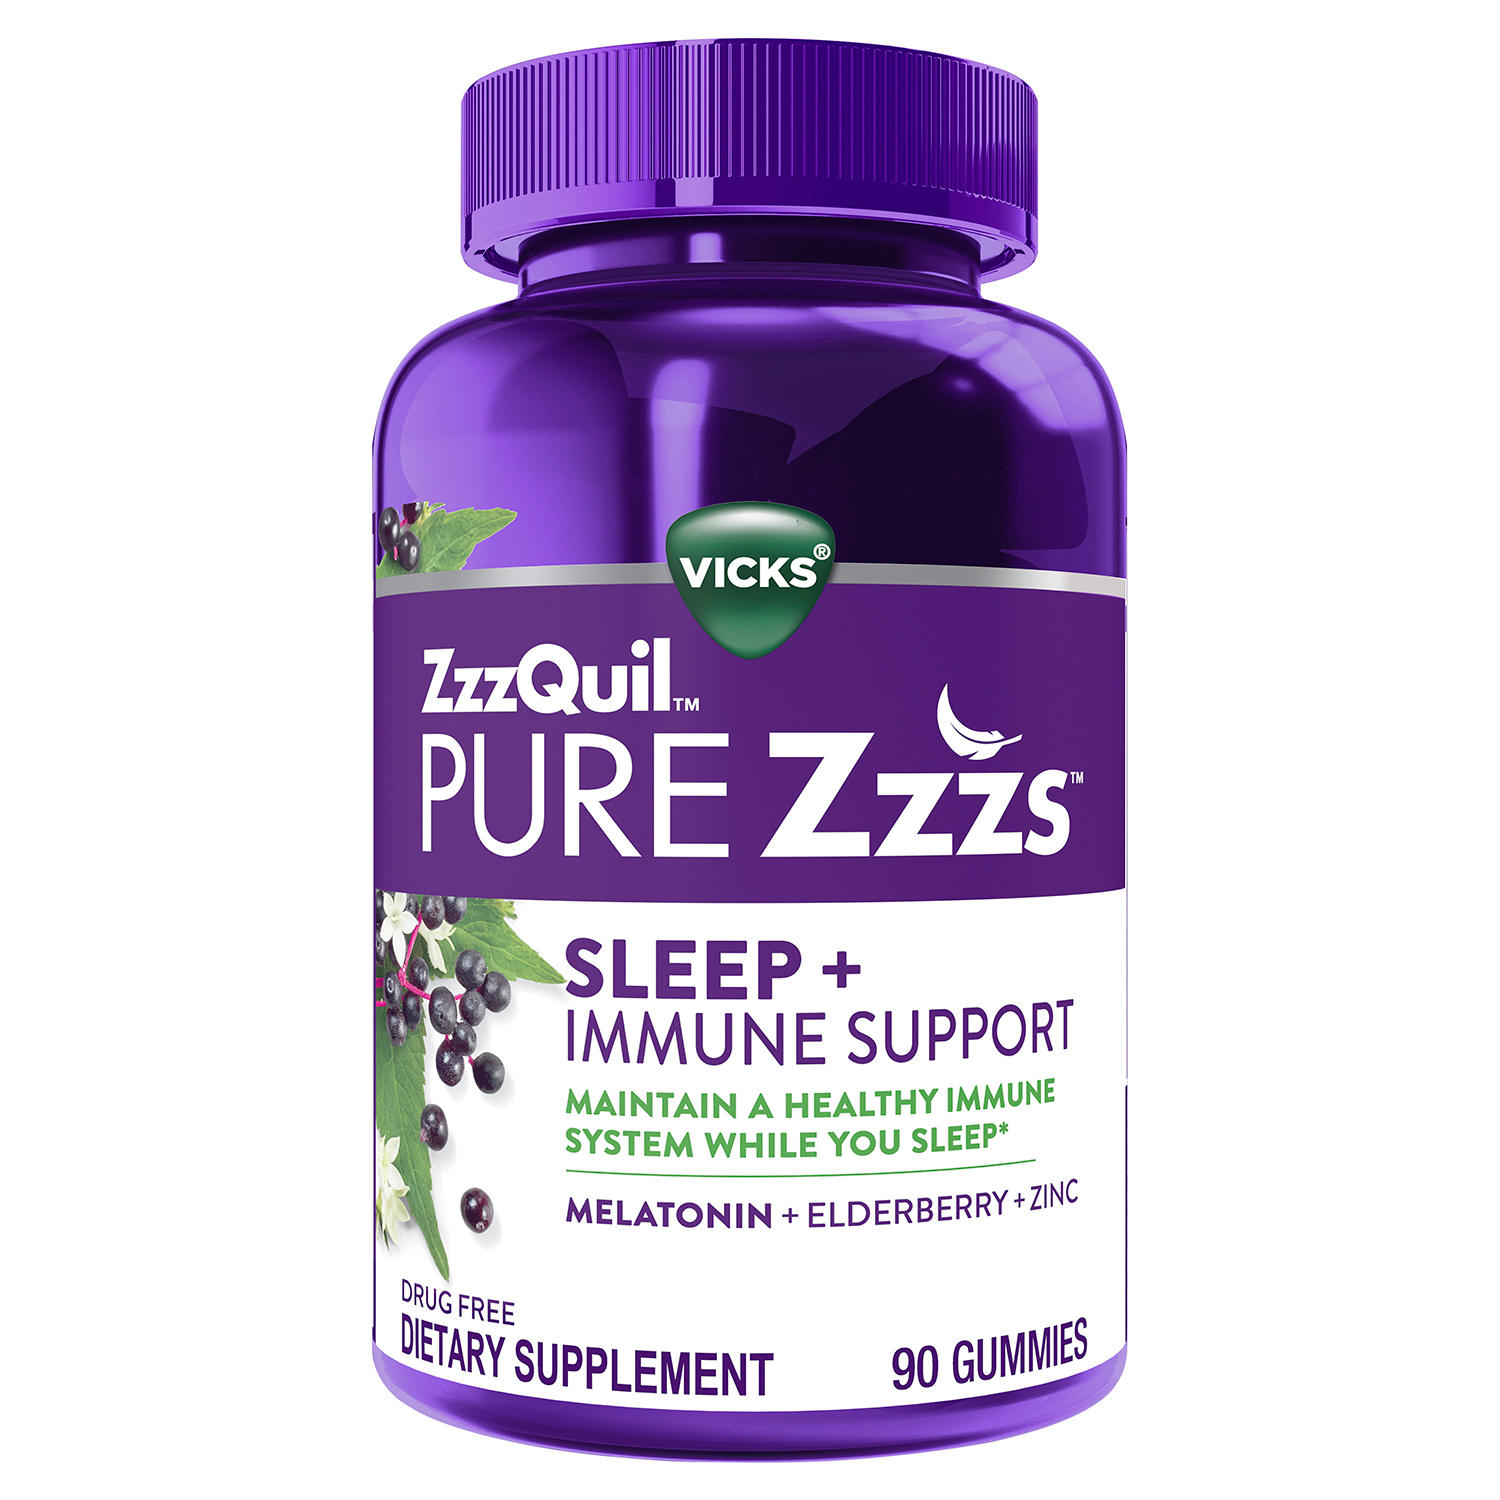 ZzzQuil PURE Zzzs Sleep + Immune Support Melatonin Sleep Aid Gummies with Elderberry, Zinc 90 Count - 323900042339